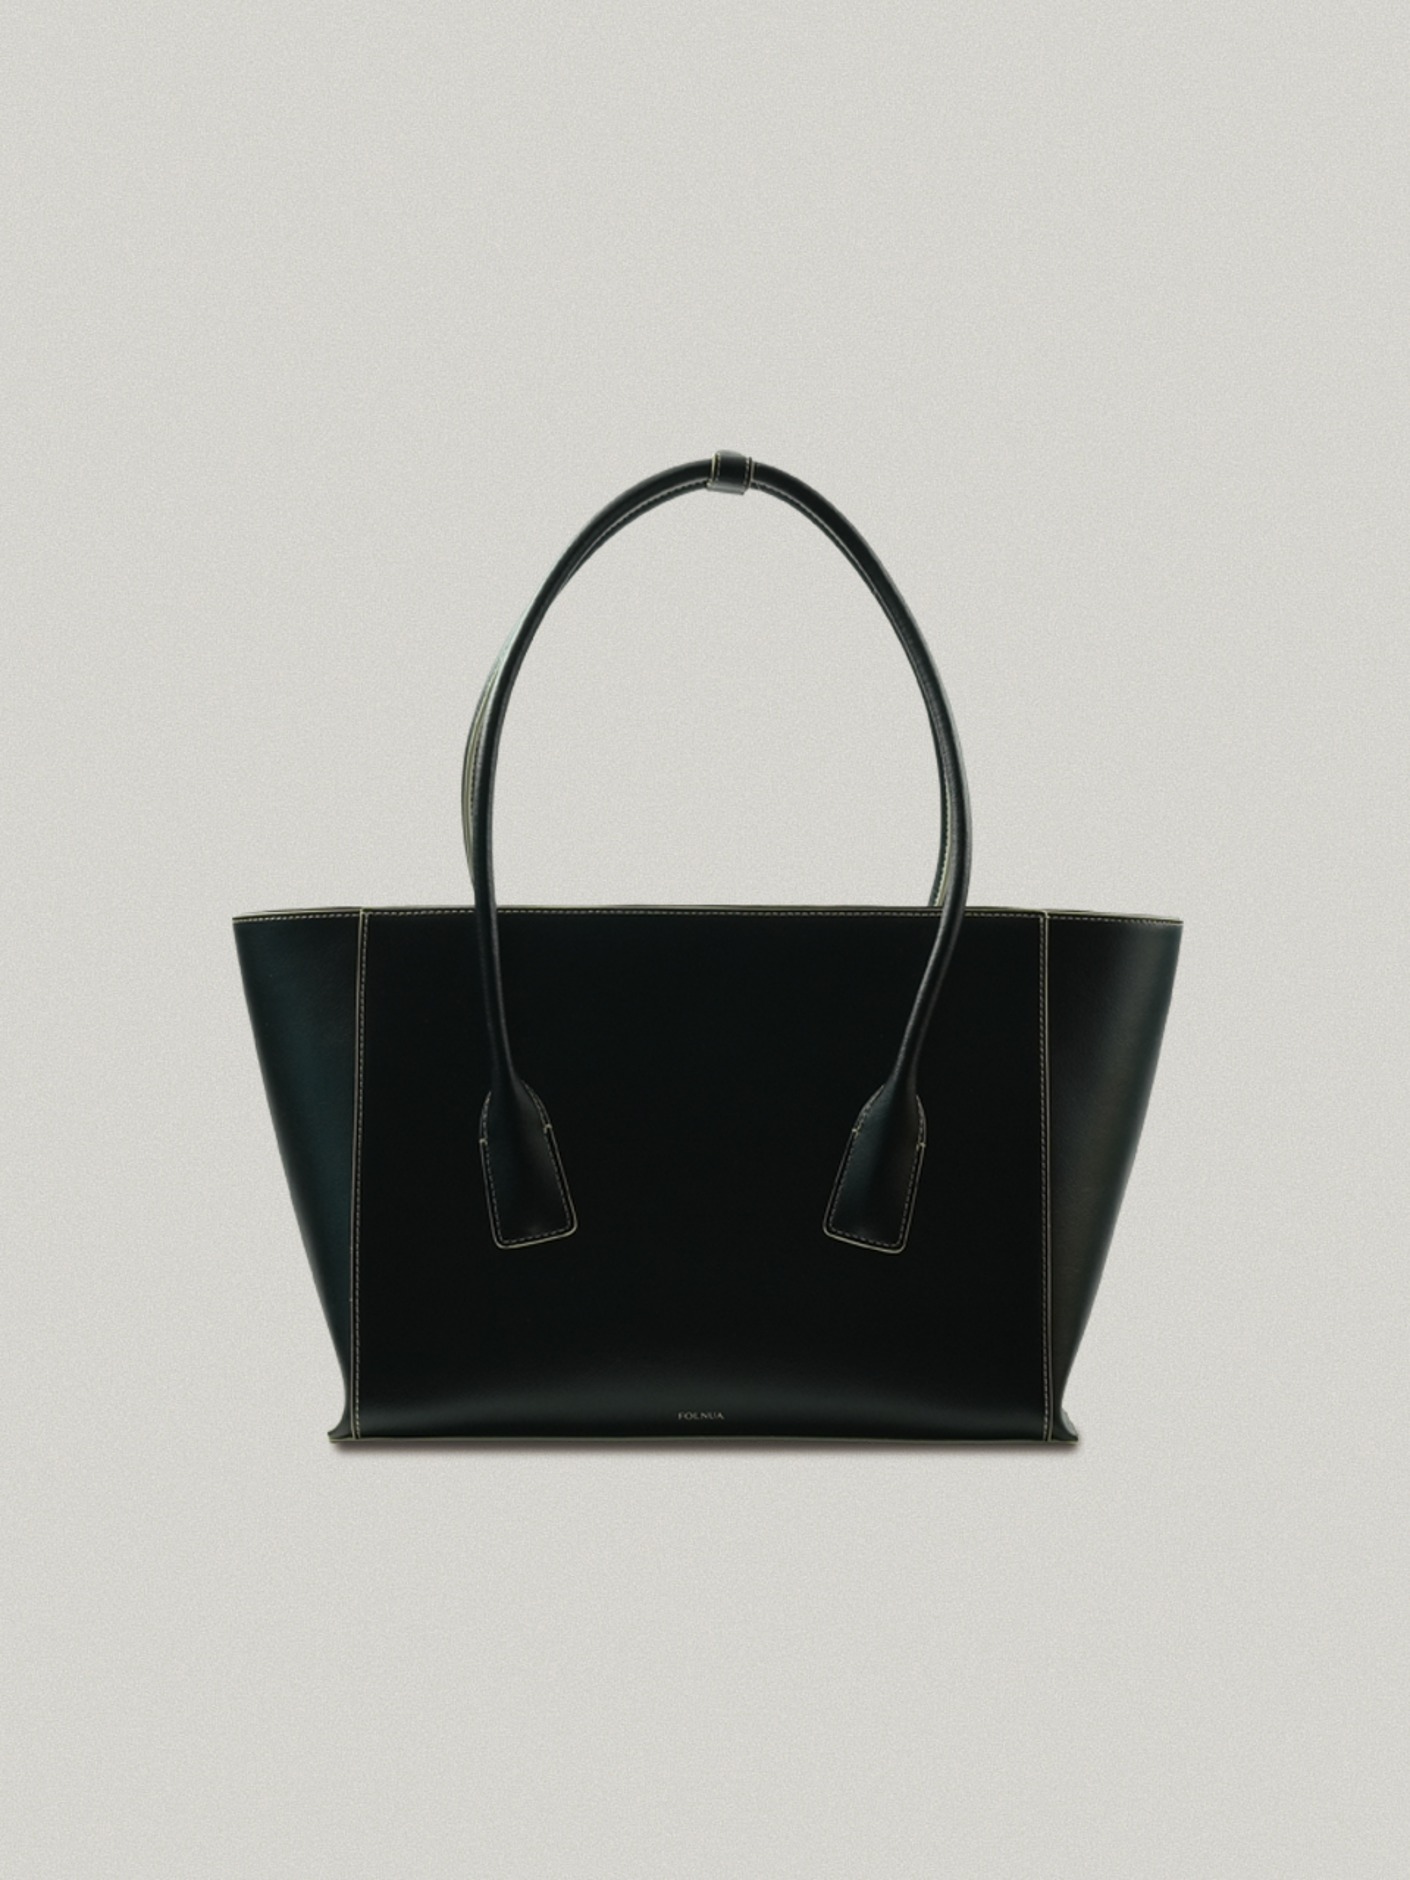 [LIMITED] Basket bag Black - Stitch바스켓백 - 스티치